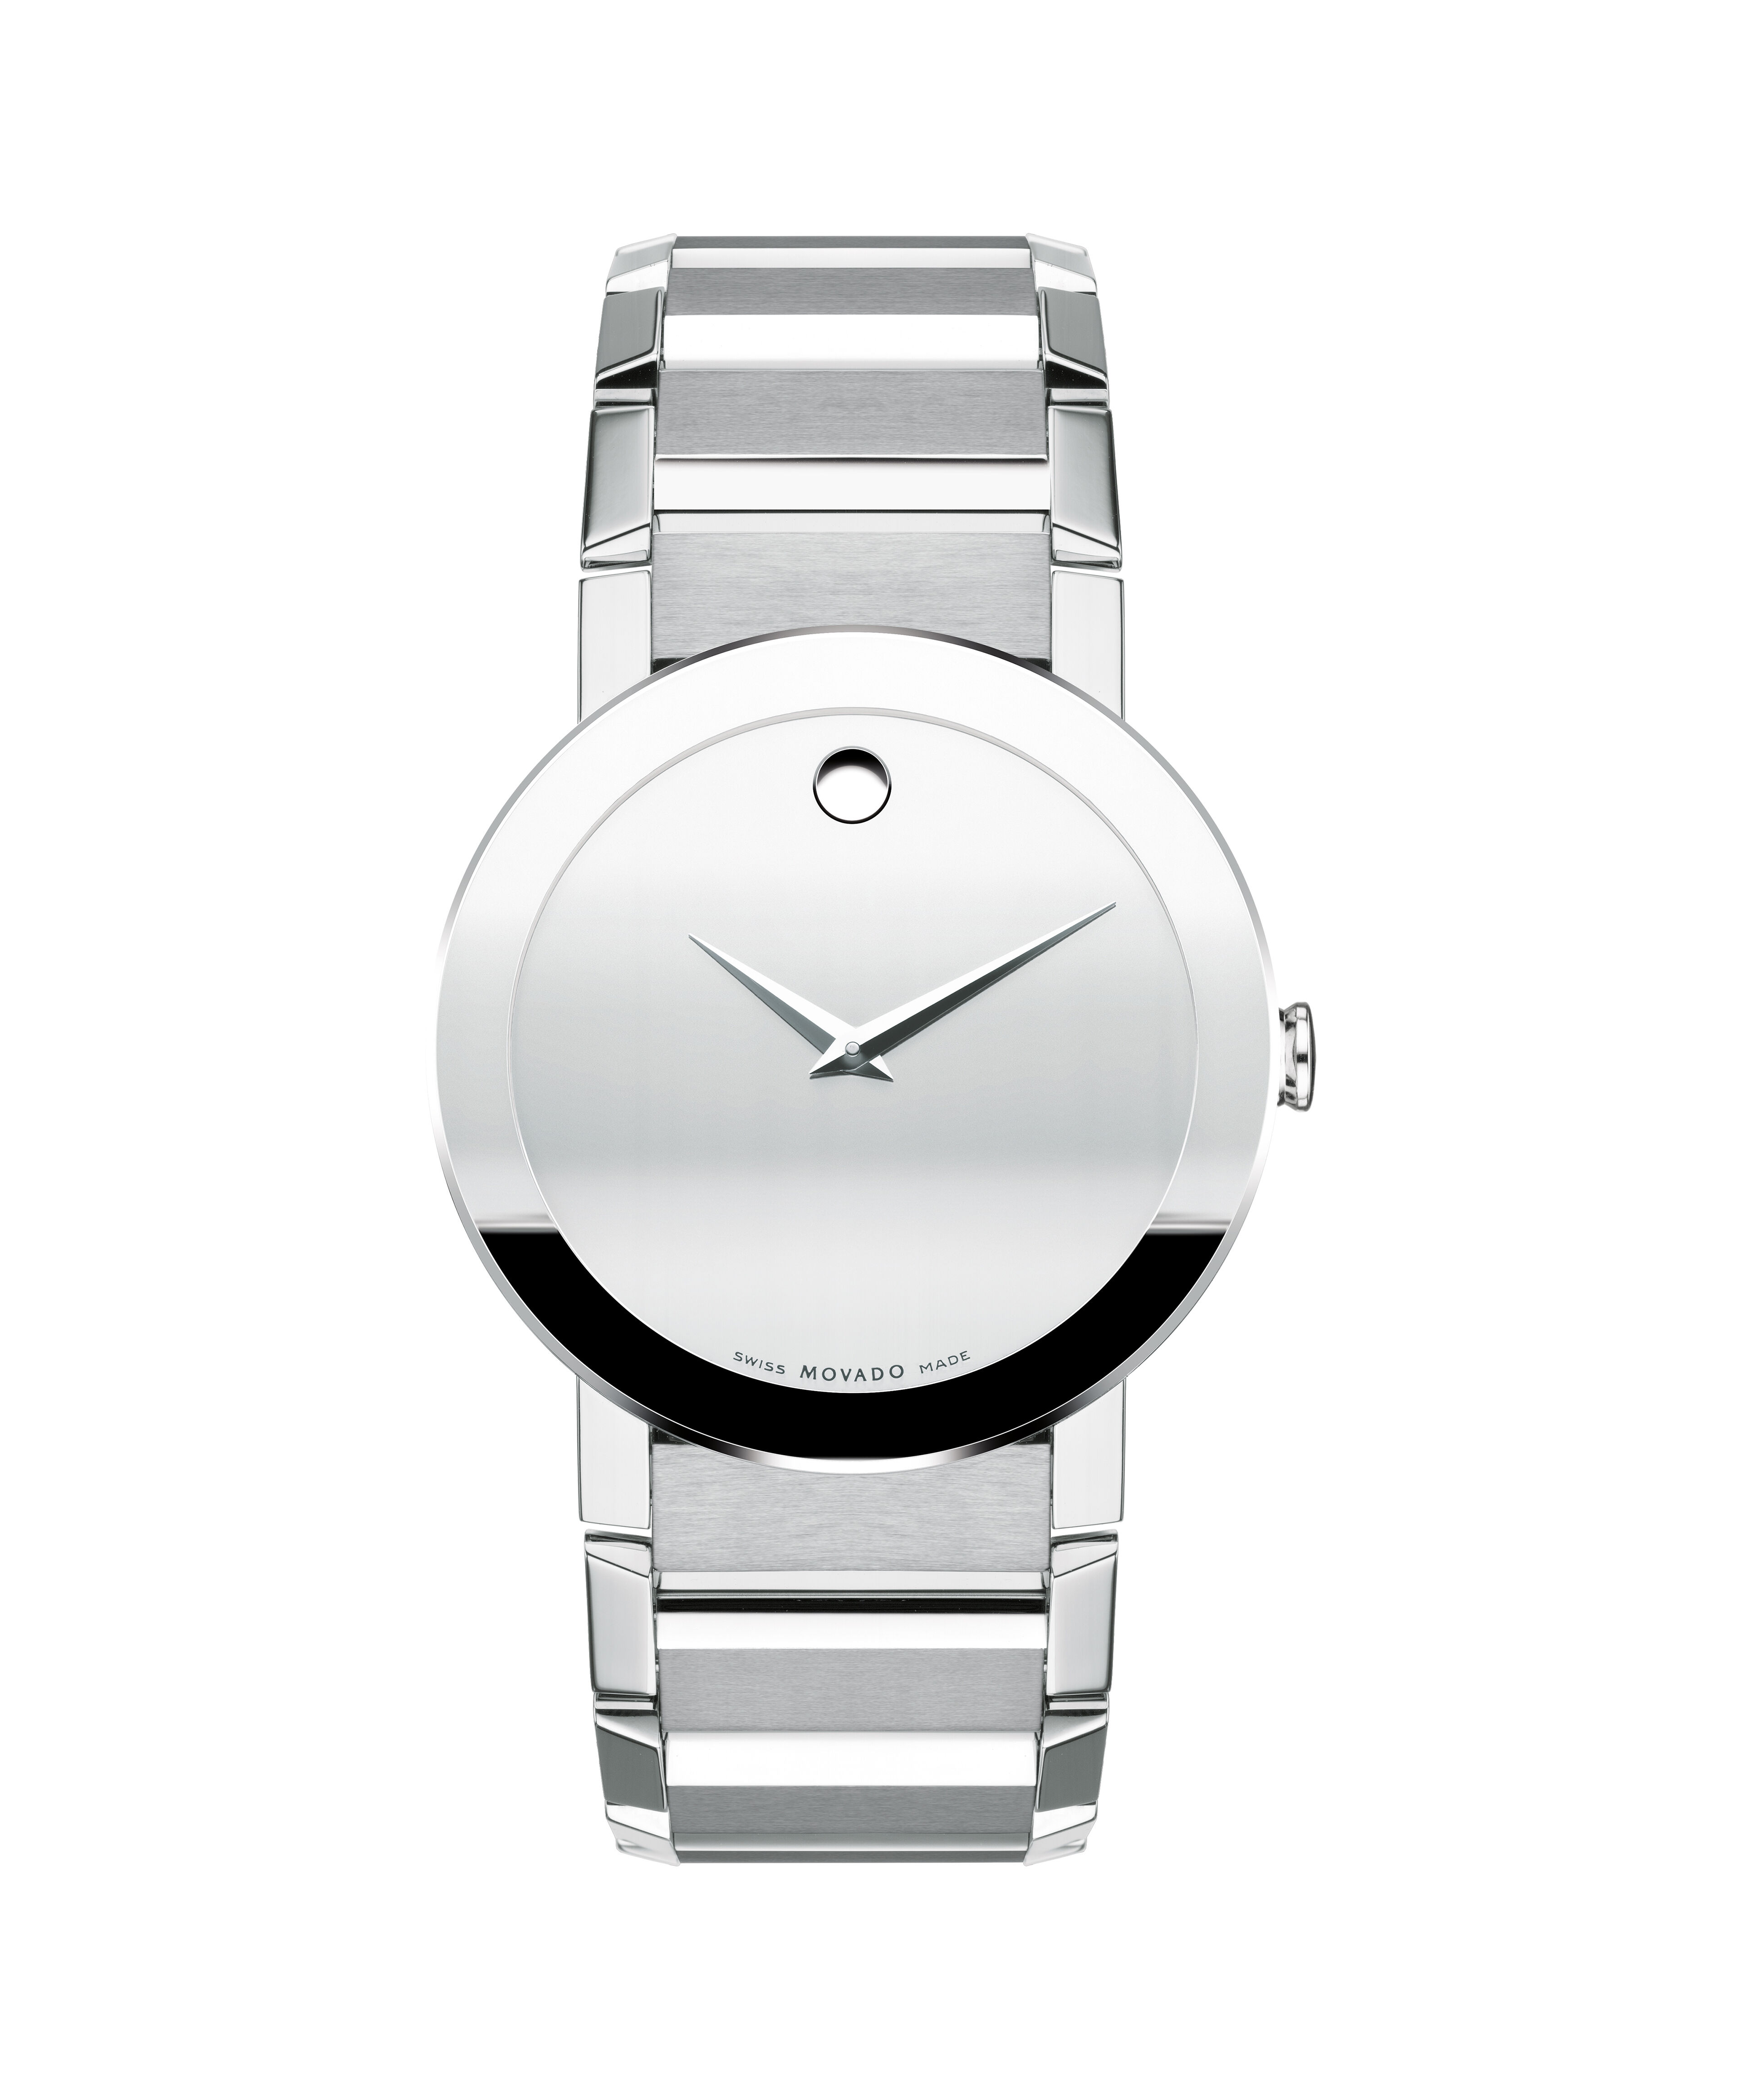 Movado 38mm Collection Watch 01.1.14.1085Movado pocket watch Vermeil watch